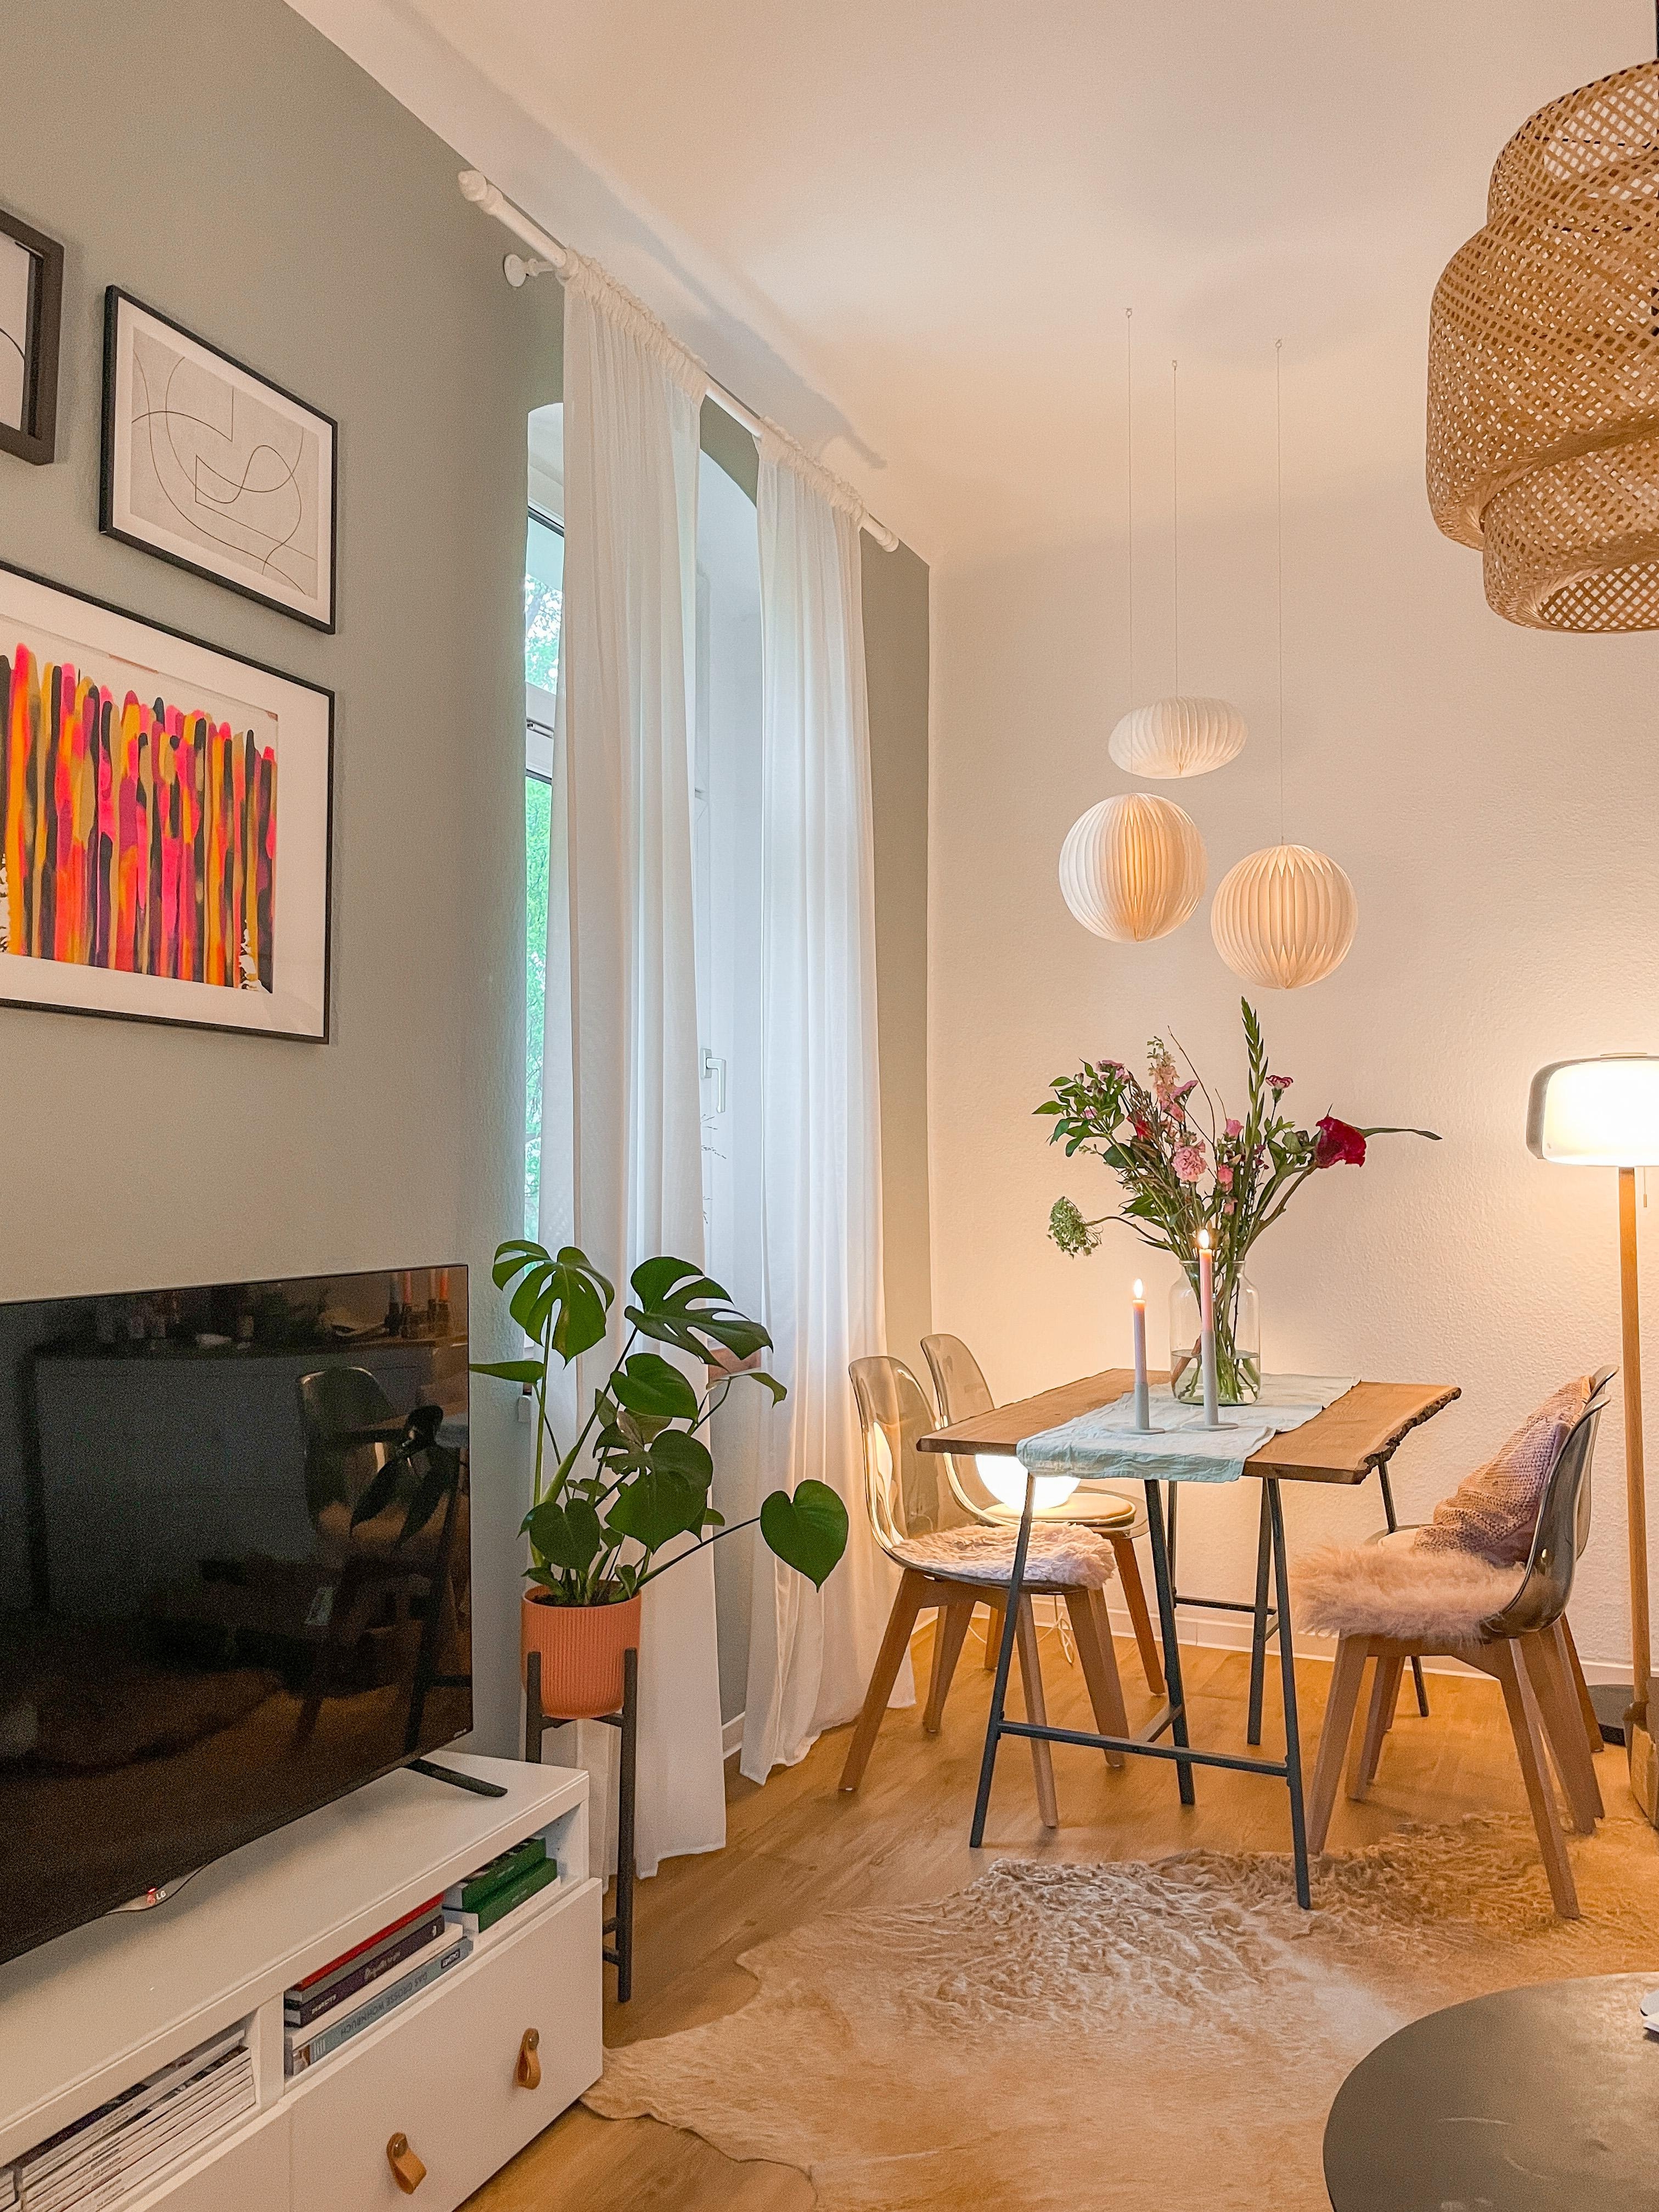 #livingroom #esstisch #diy #bilder #jadegrün #flowers